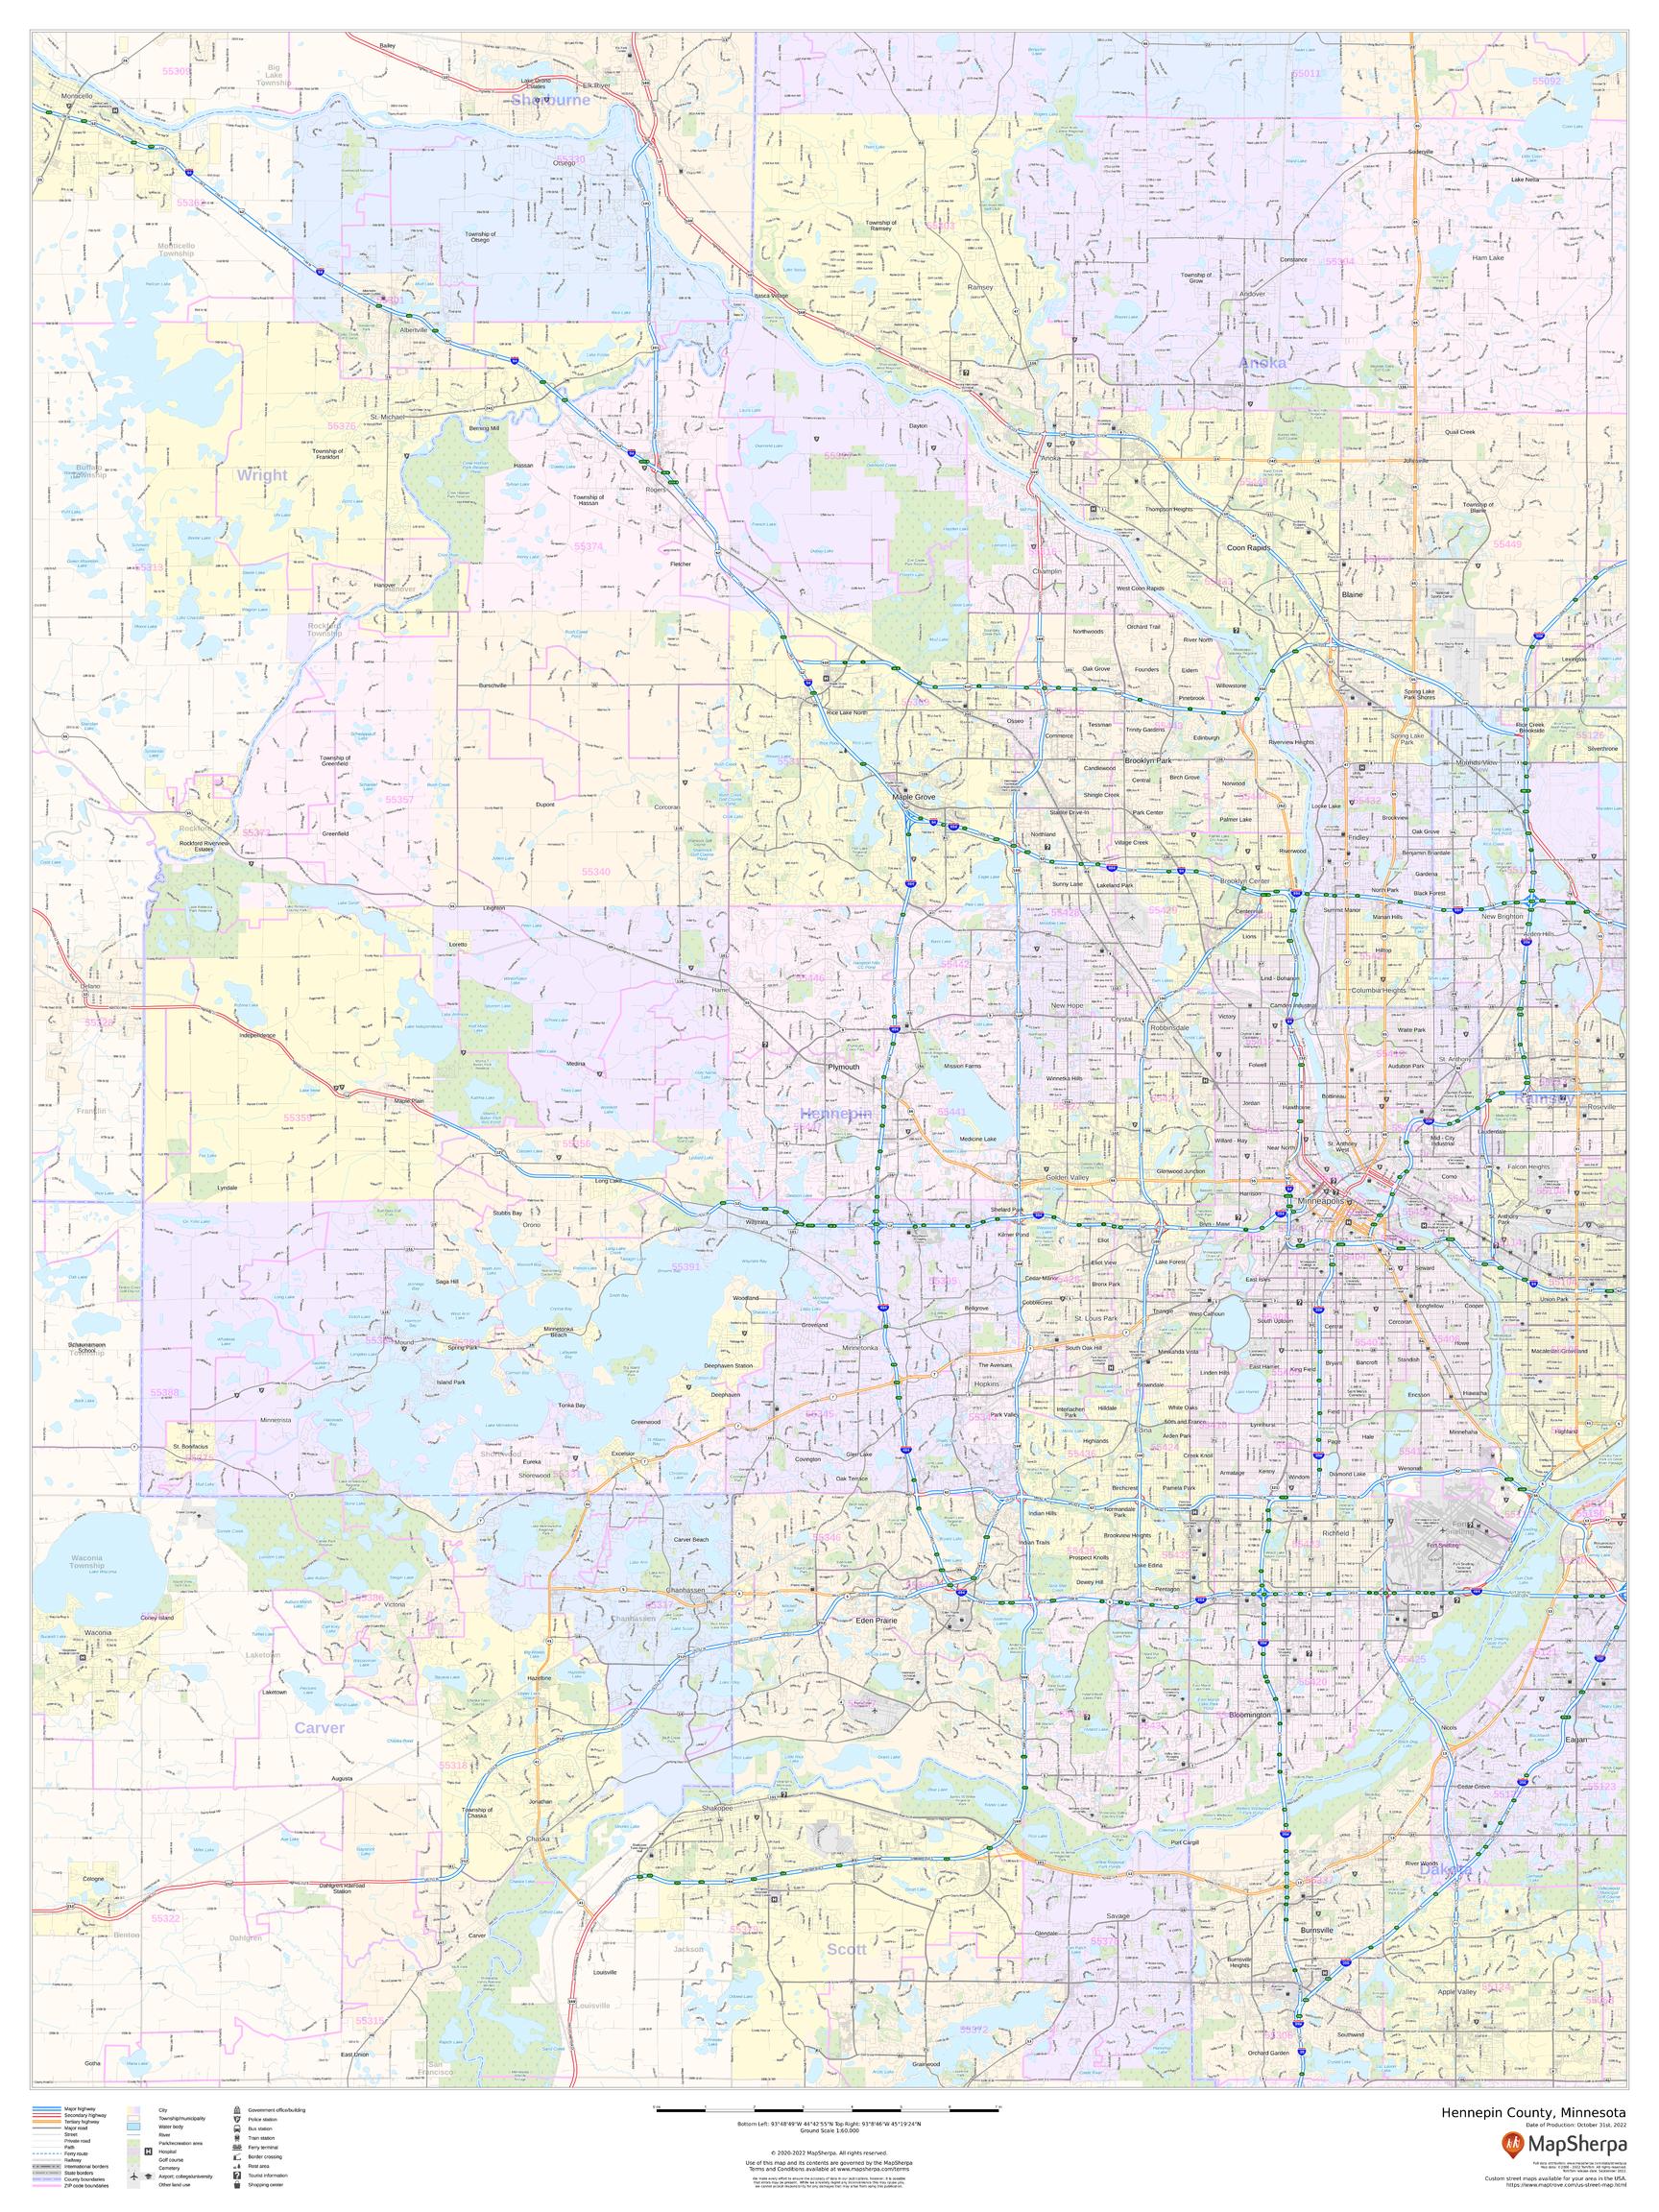 Saint Paul, Minnesota map with satellite view